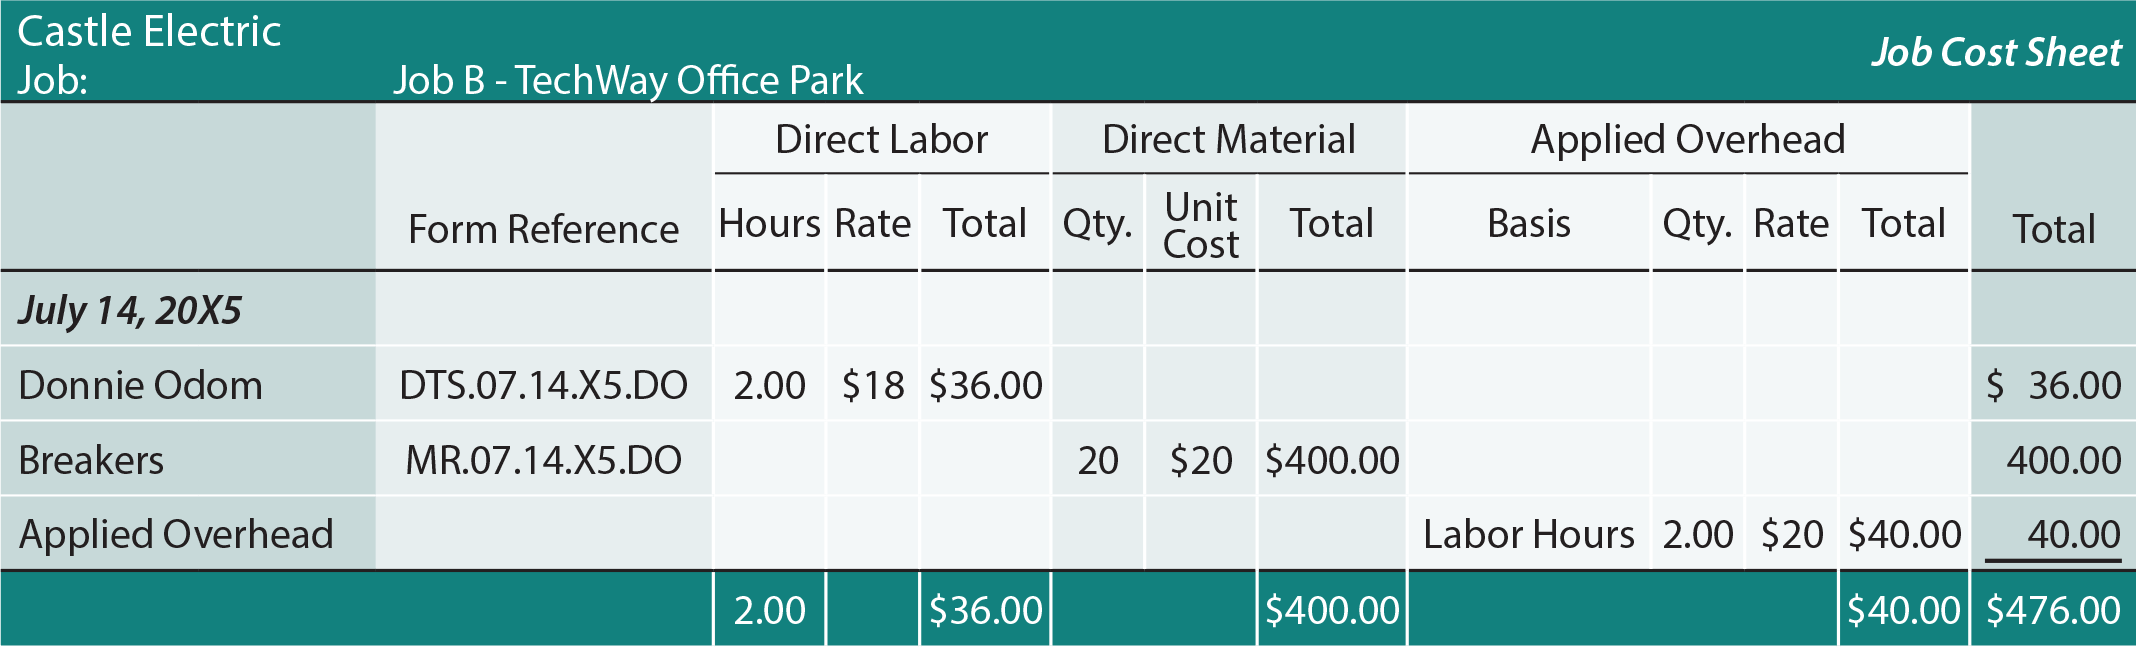 Job Costing Sheet - Job B 